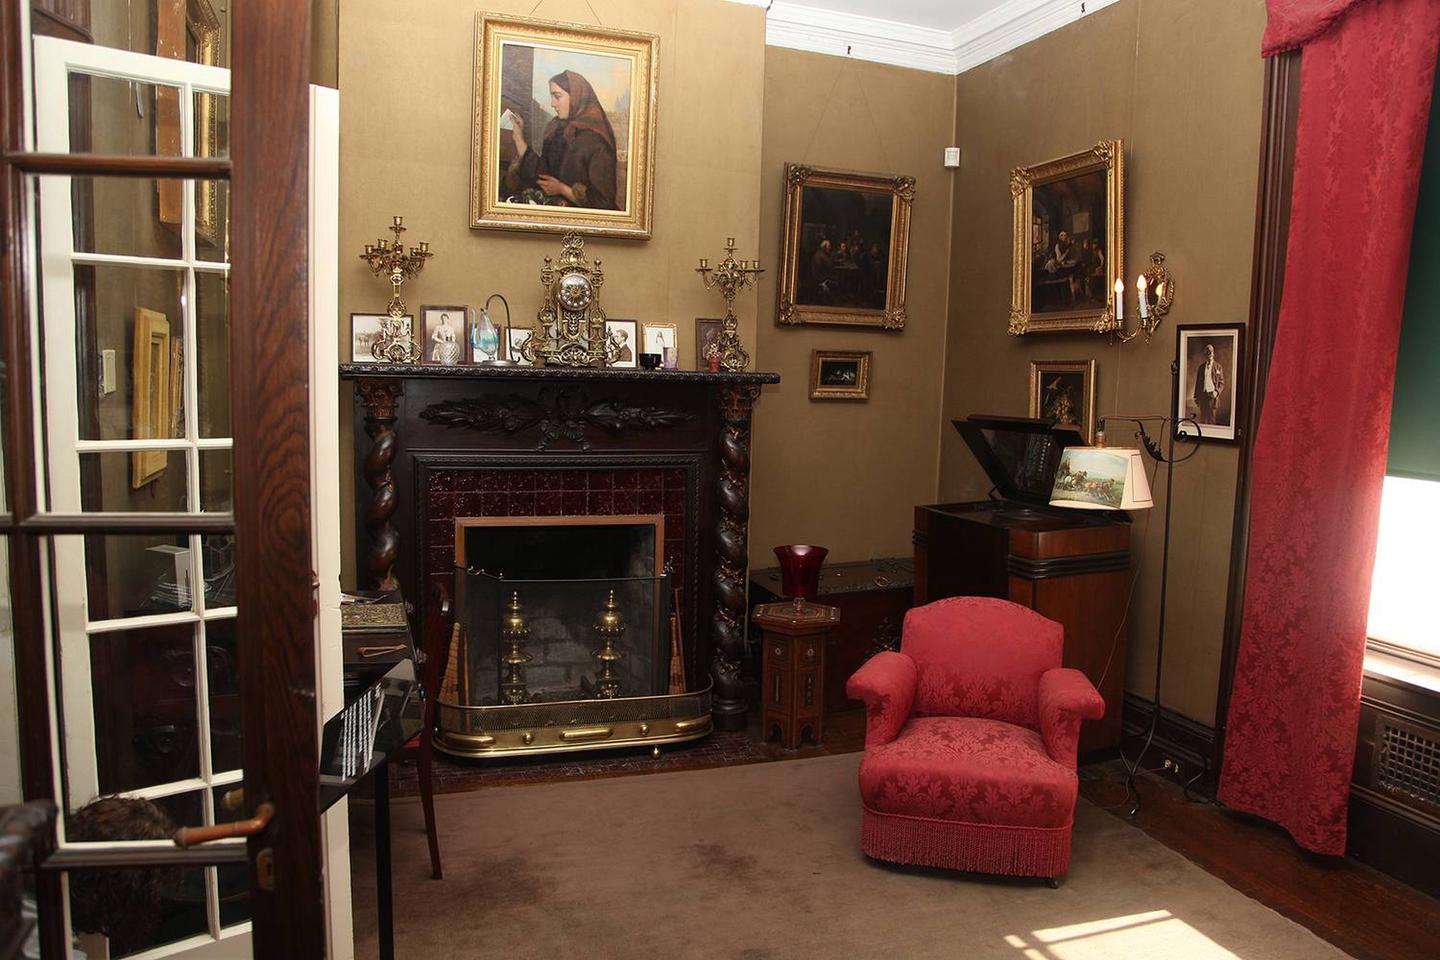 Sara Roosevelt's office